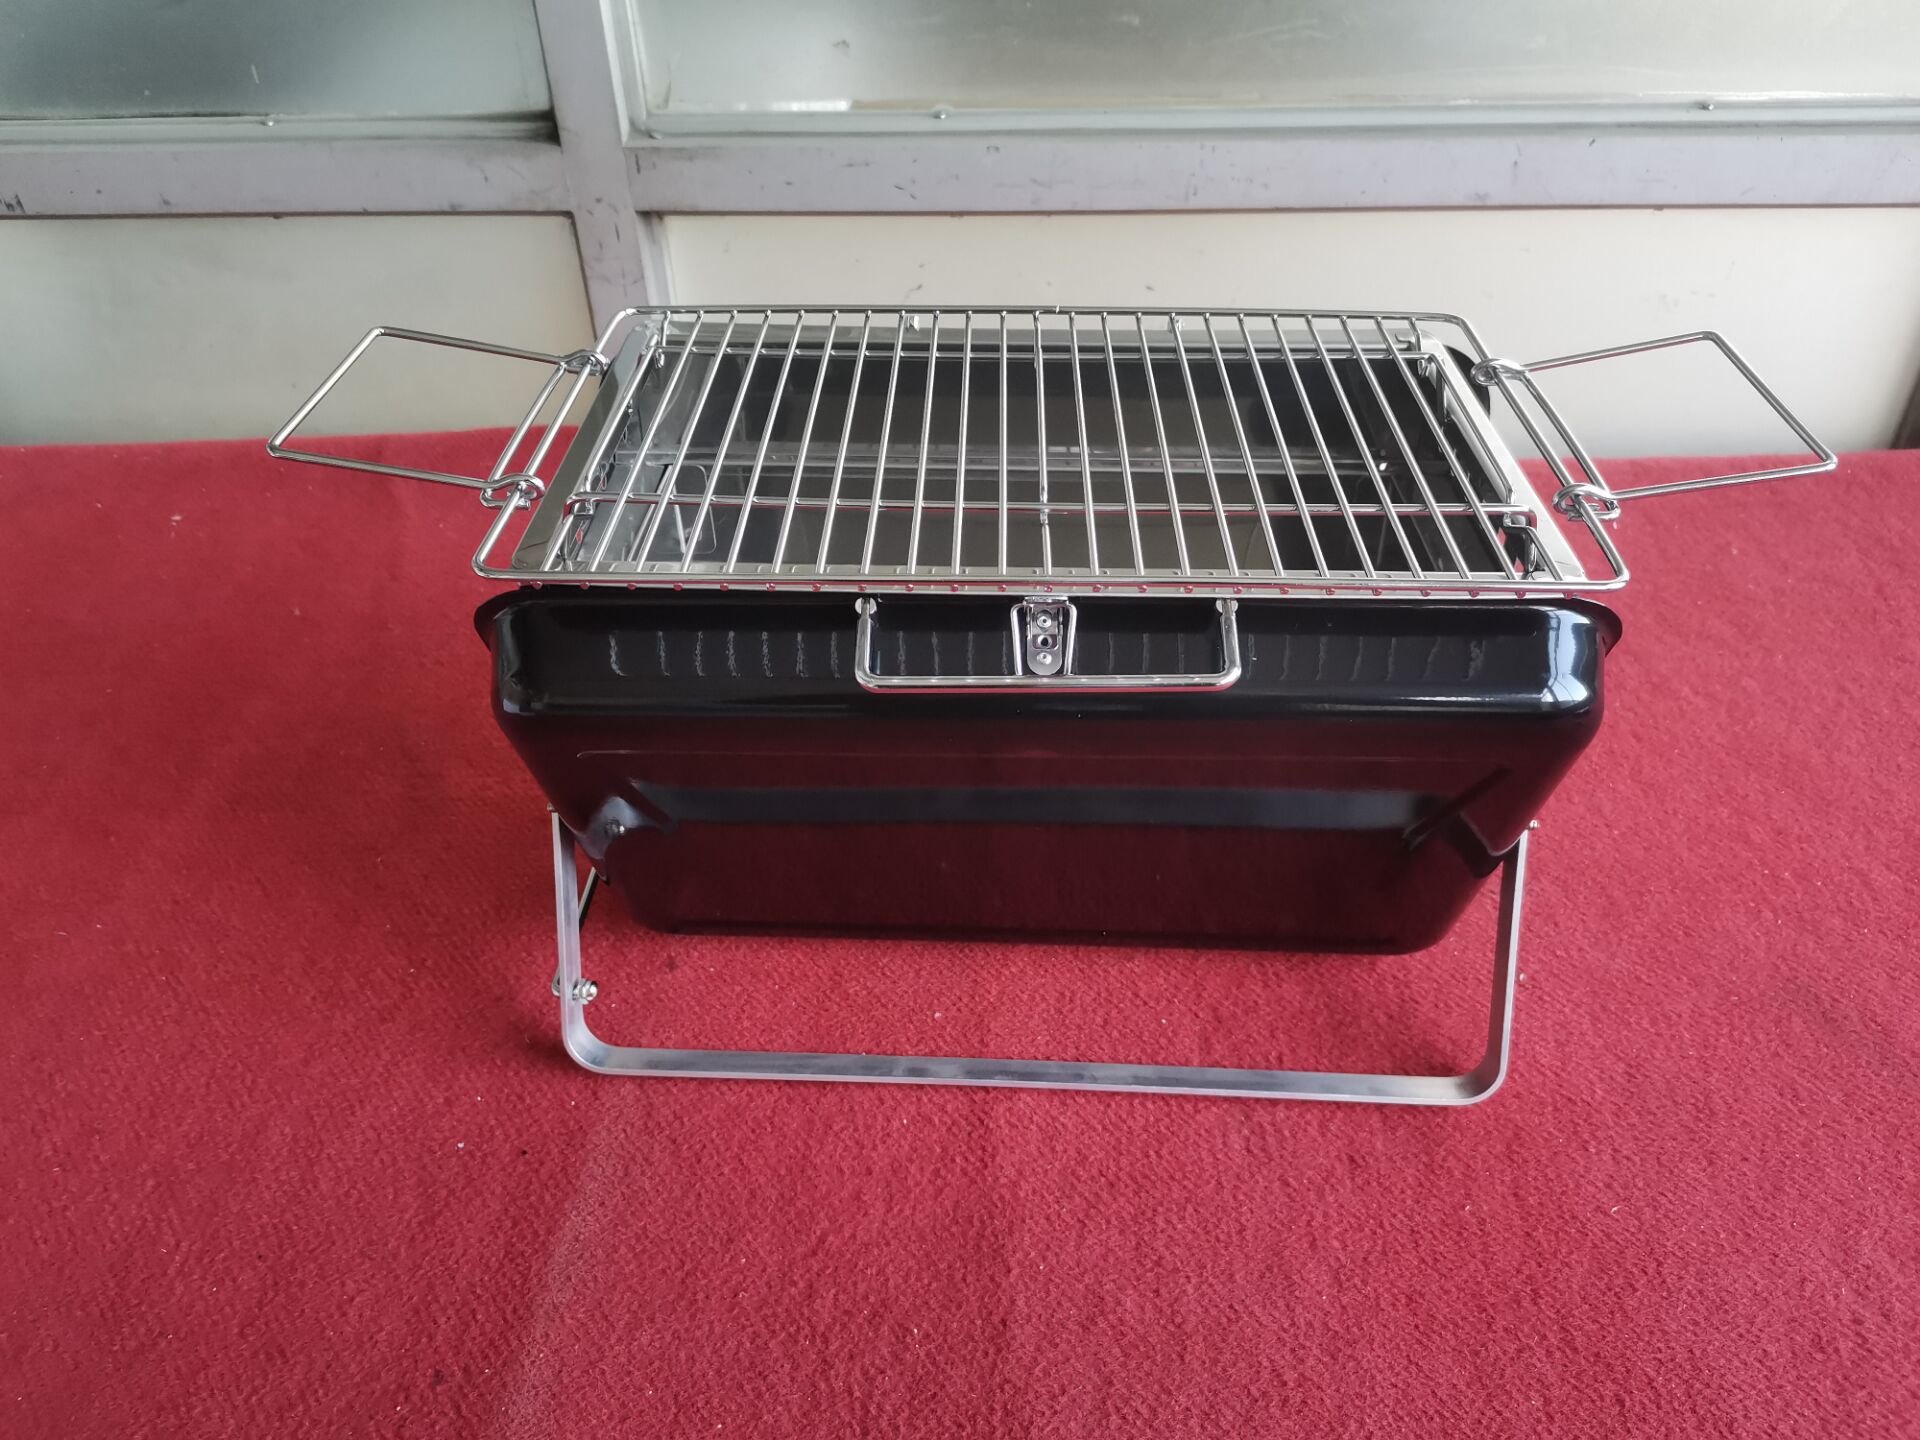 Foto inspeksi Panggangan Barbecue Arang sing disesuaikan